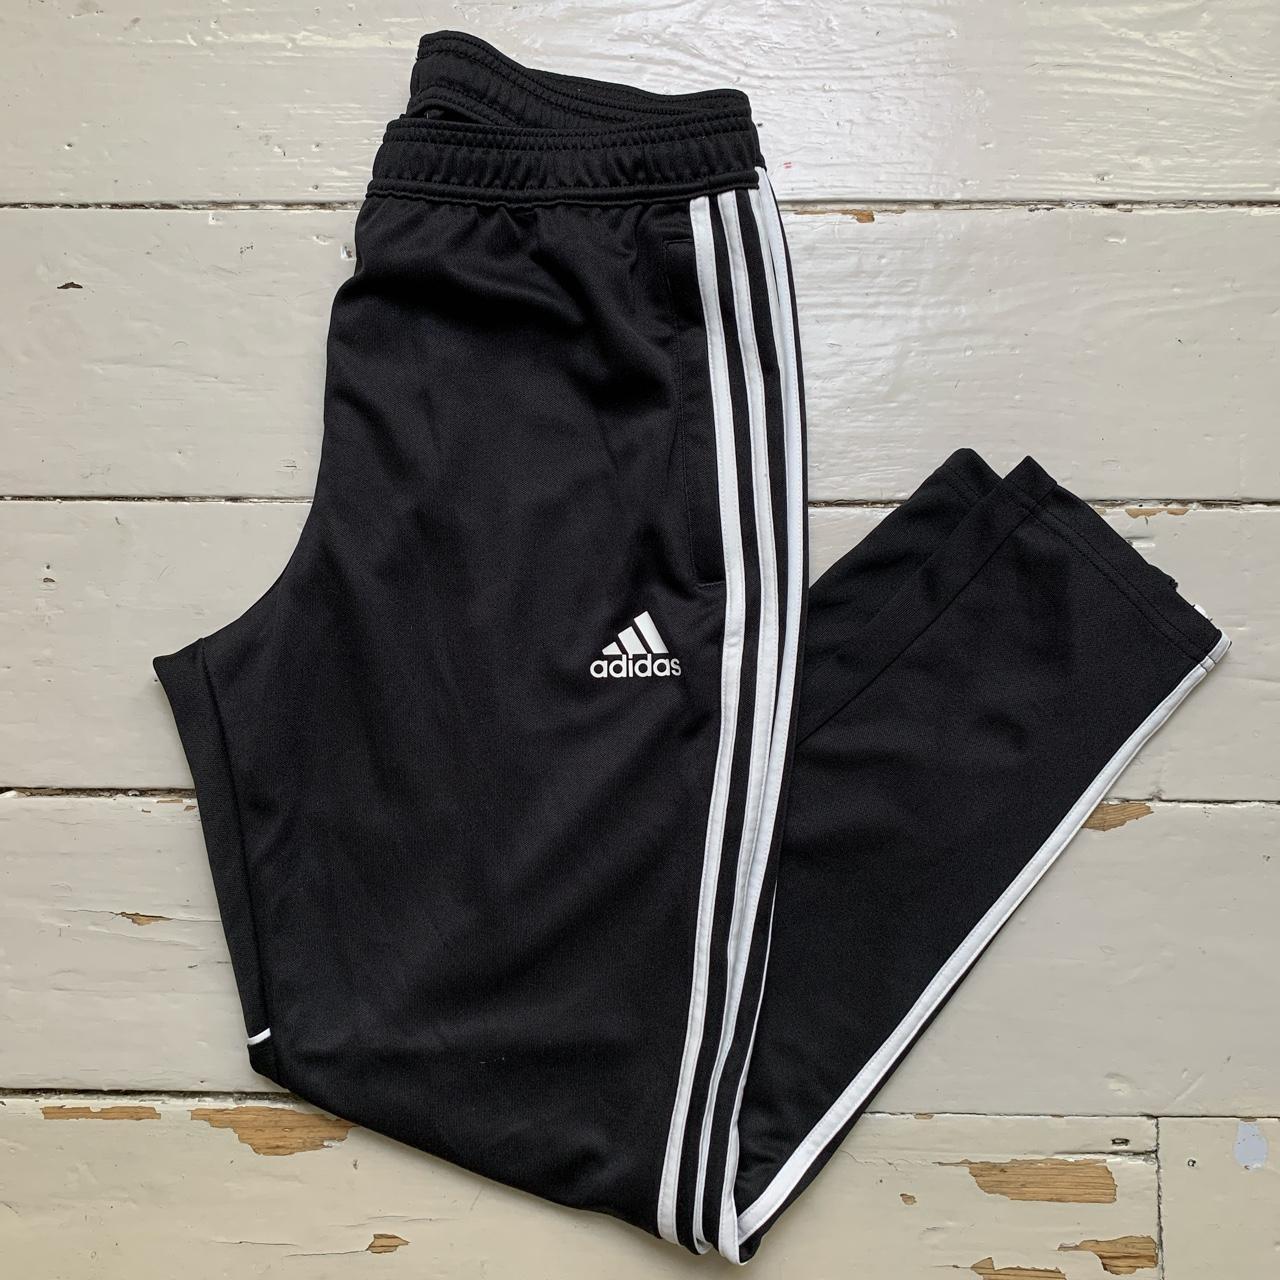 Adidas Black and White Stripe Bottoms